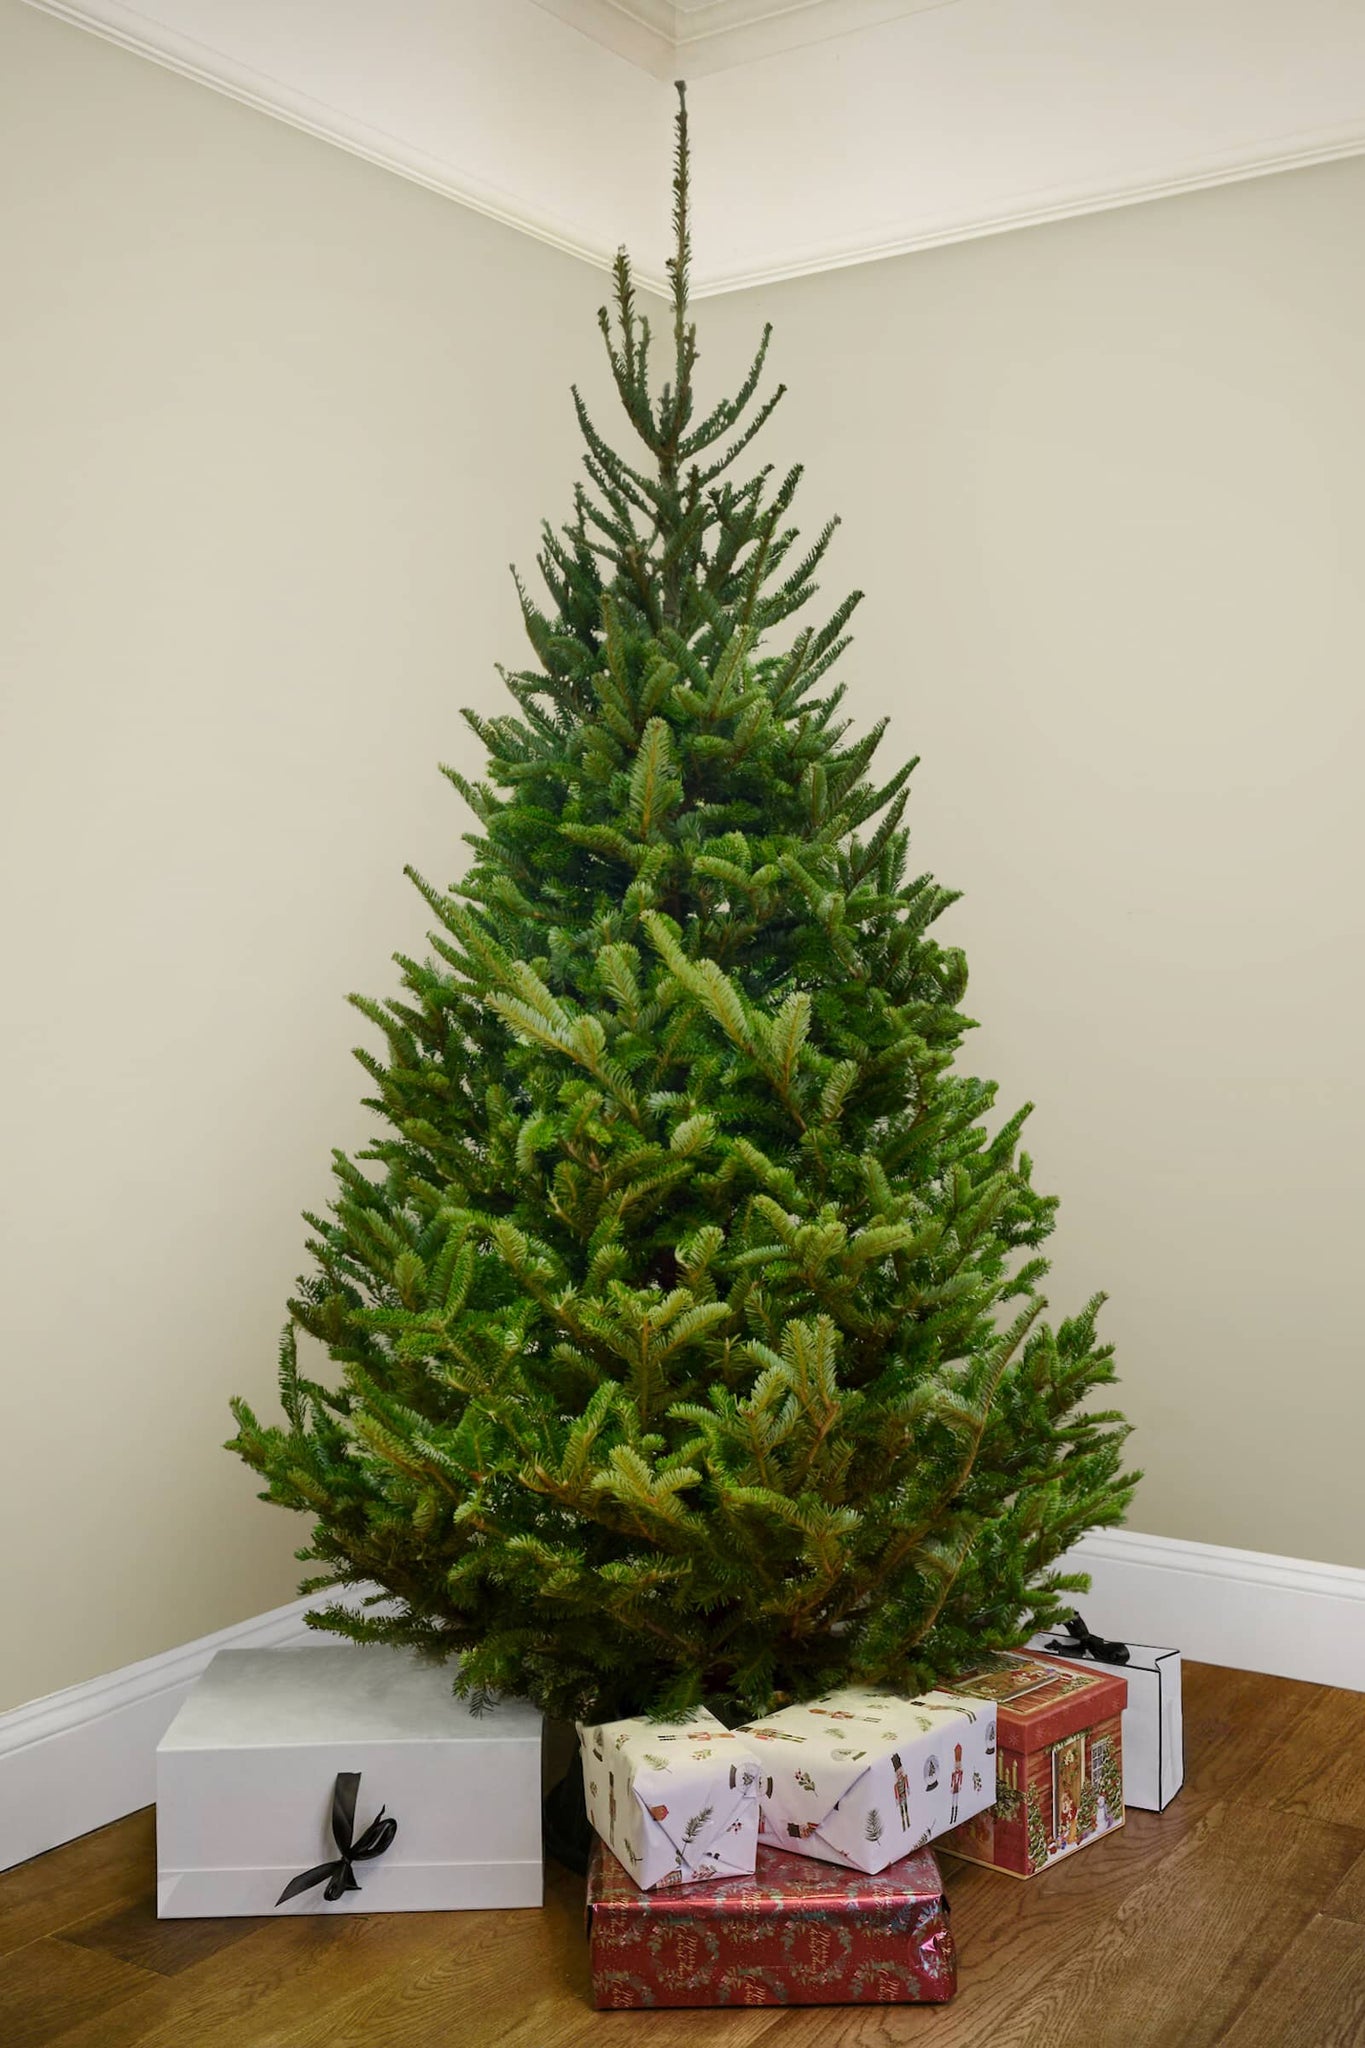 Fraser Fir - America's Premium Christmas Tree